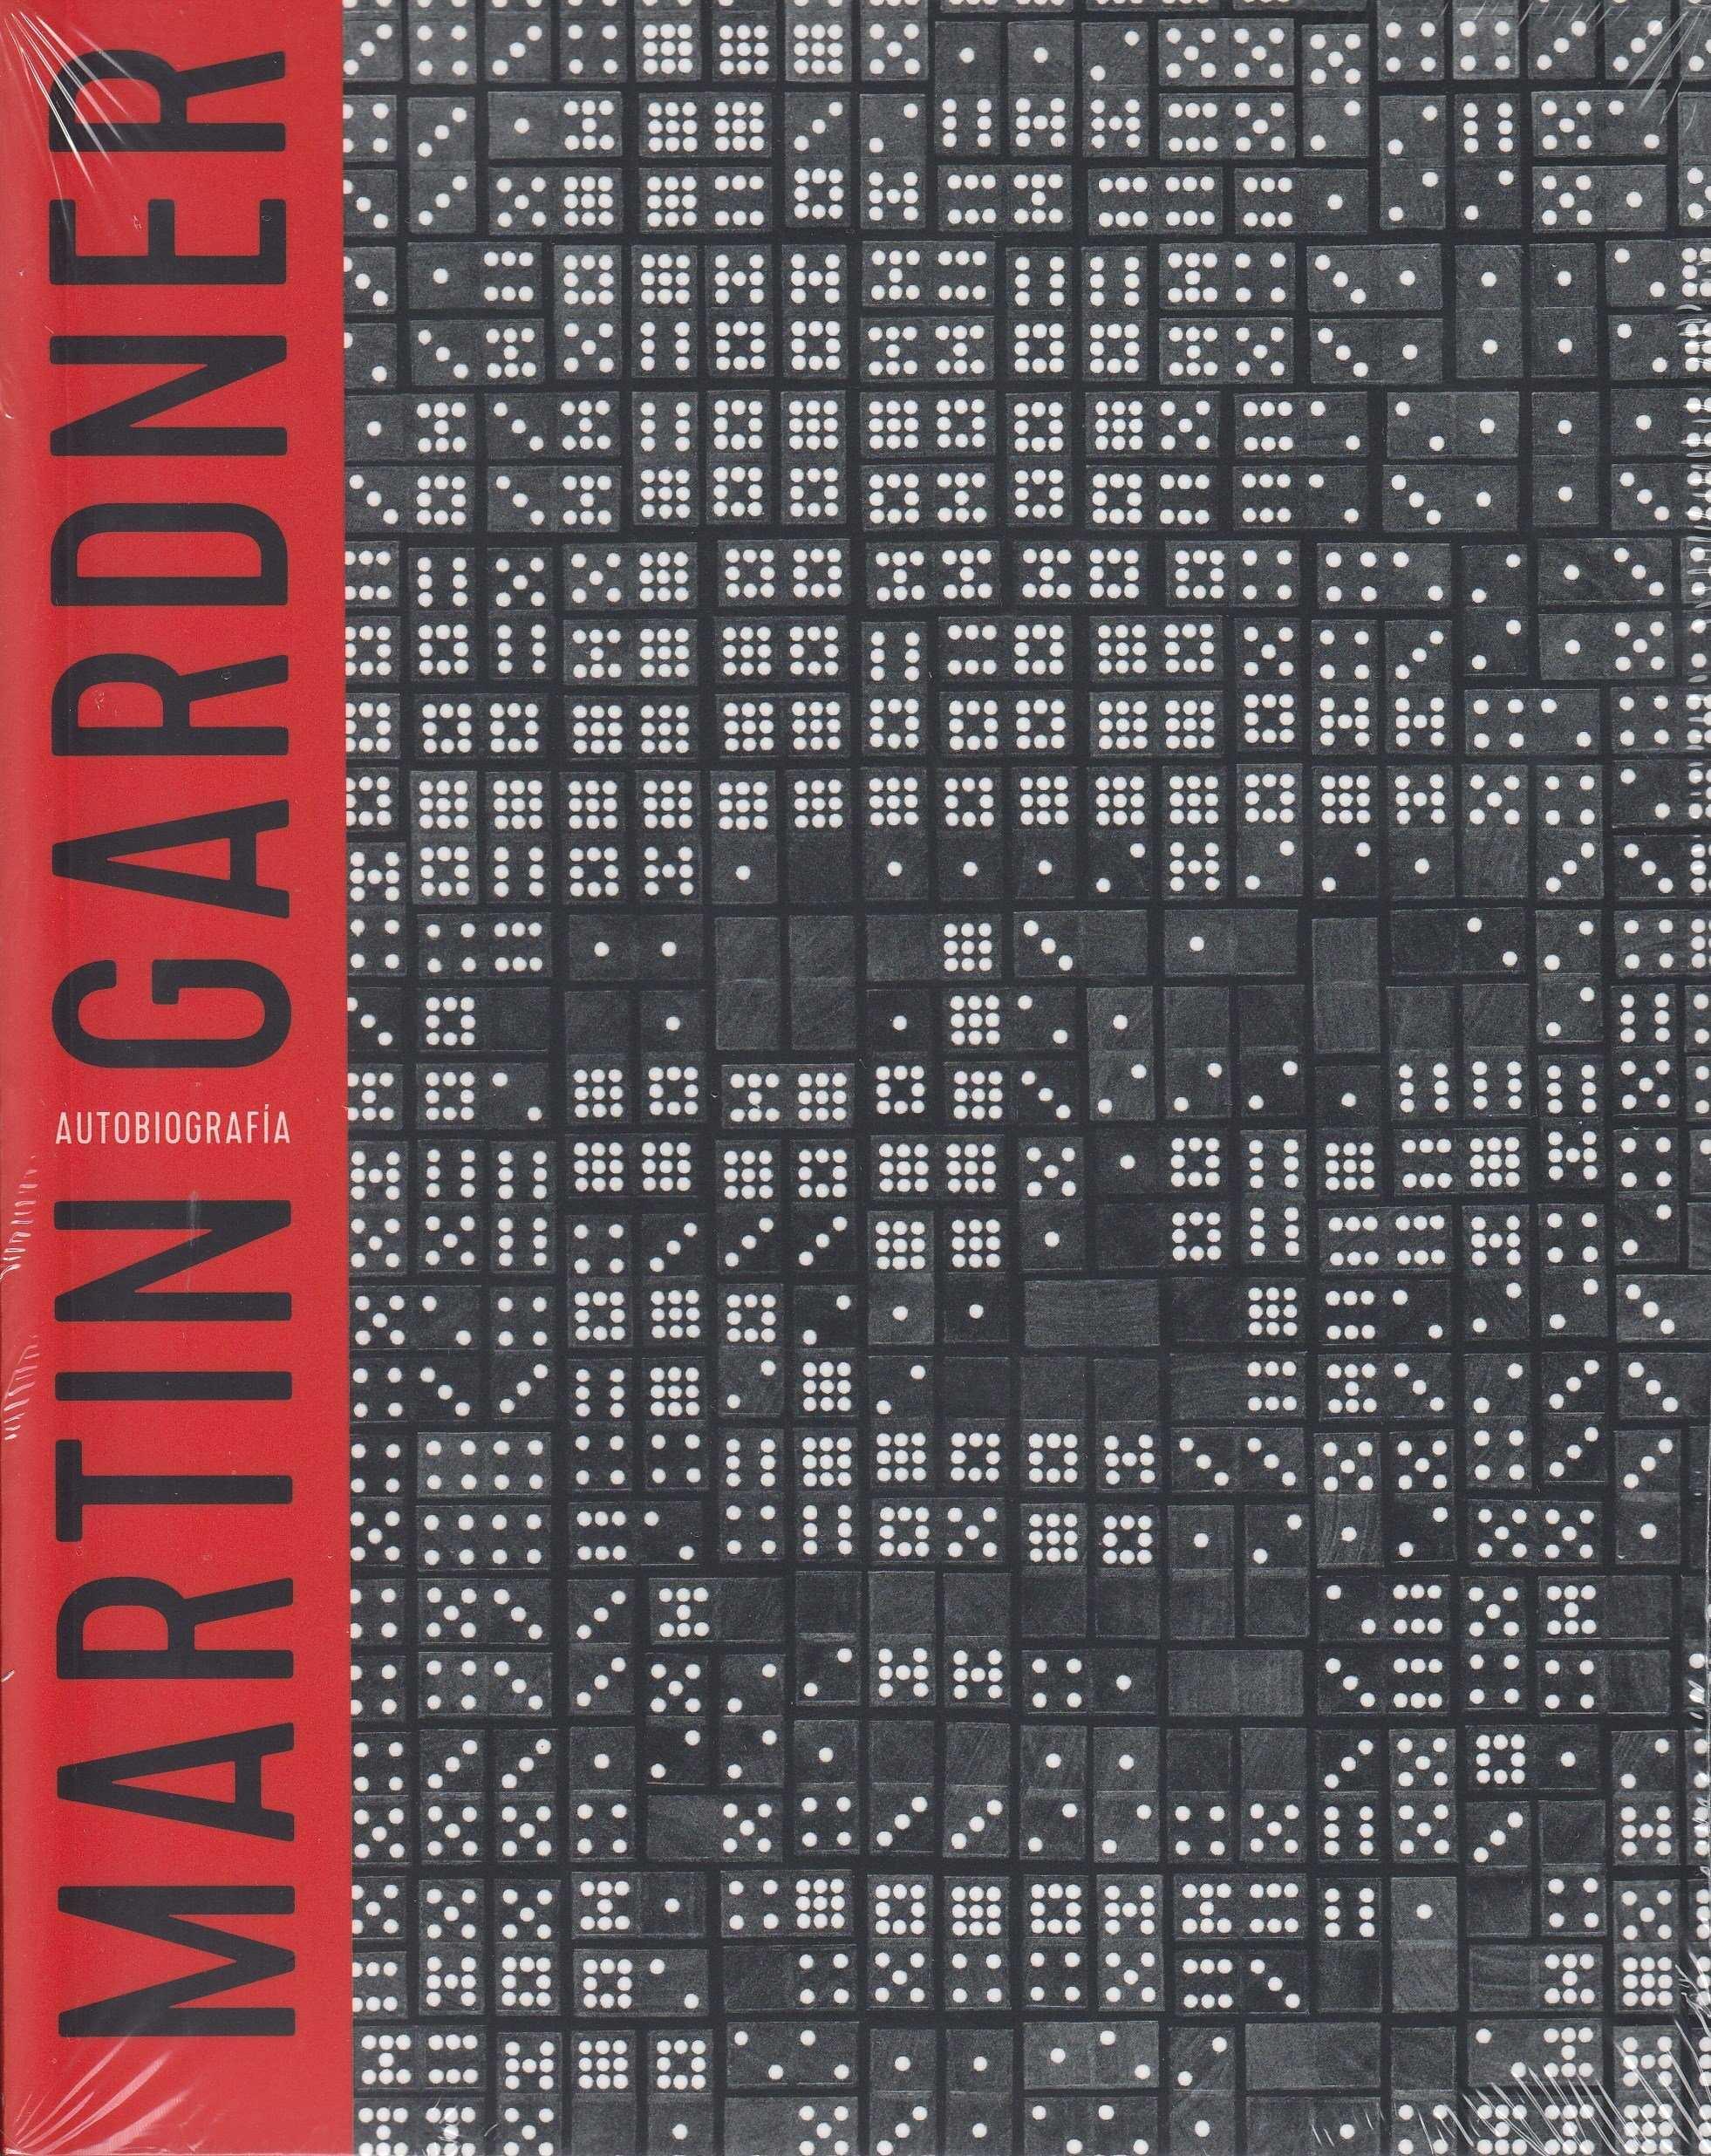 Puro Abracadabra "Autobiografía de Martin Gardner"